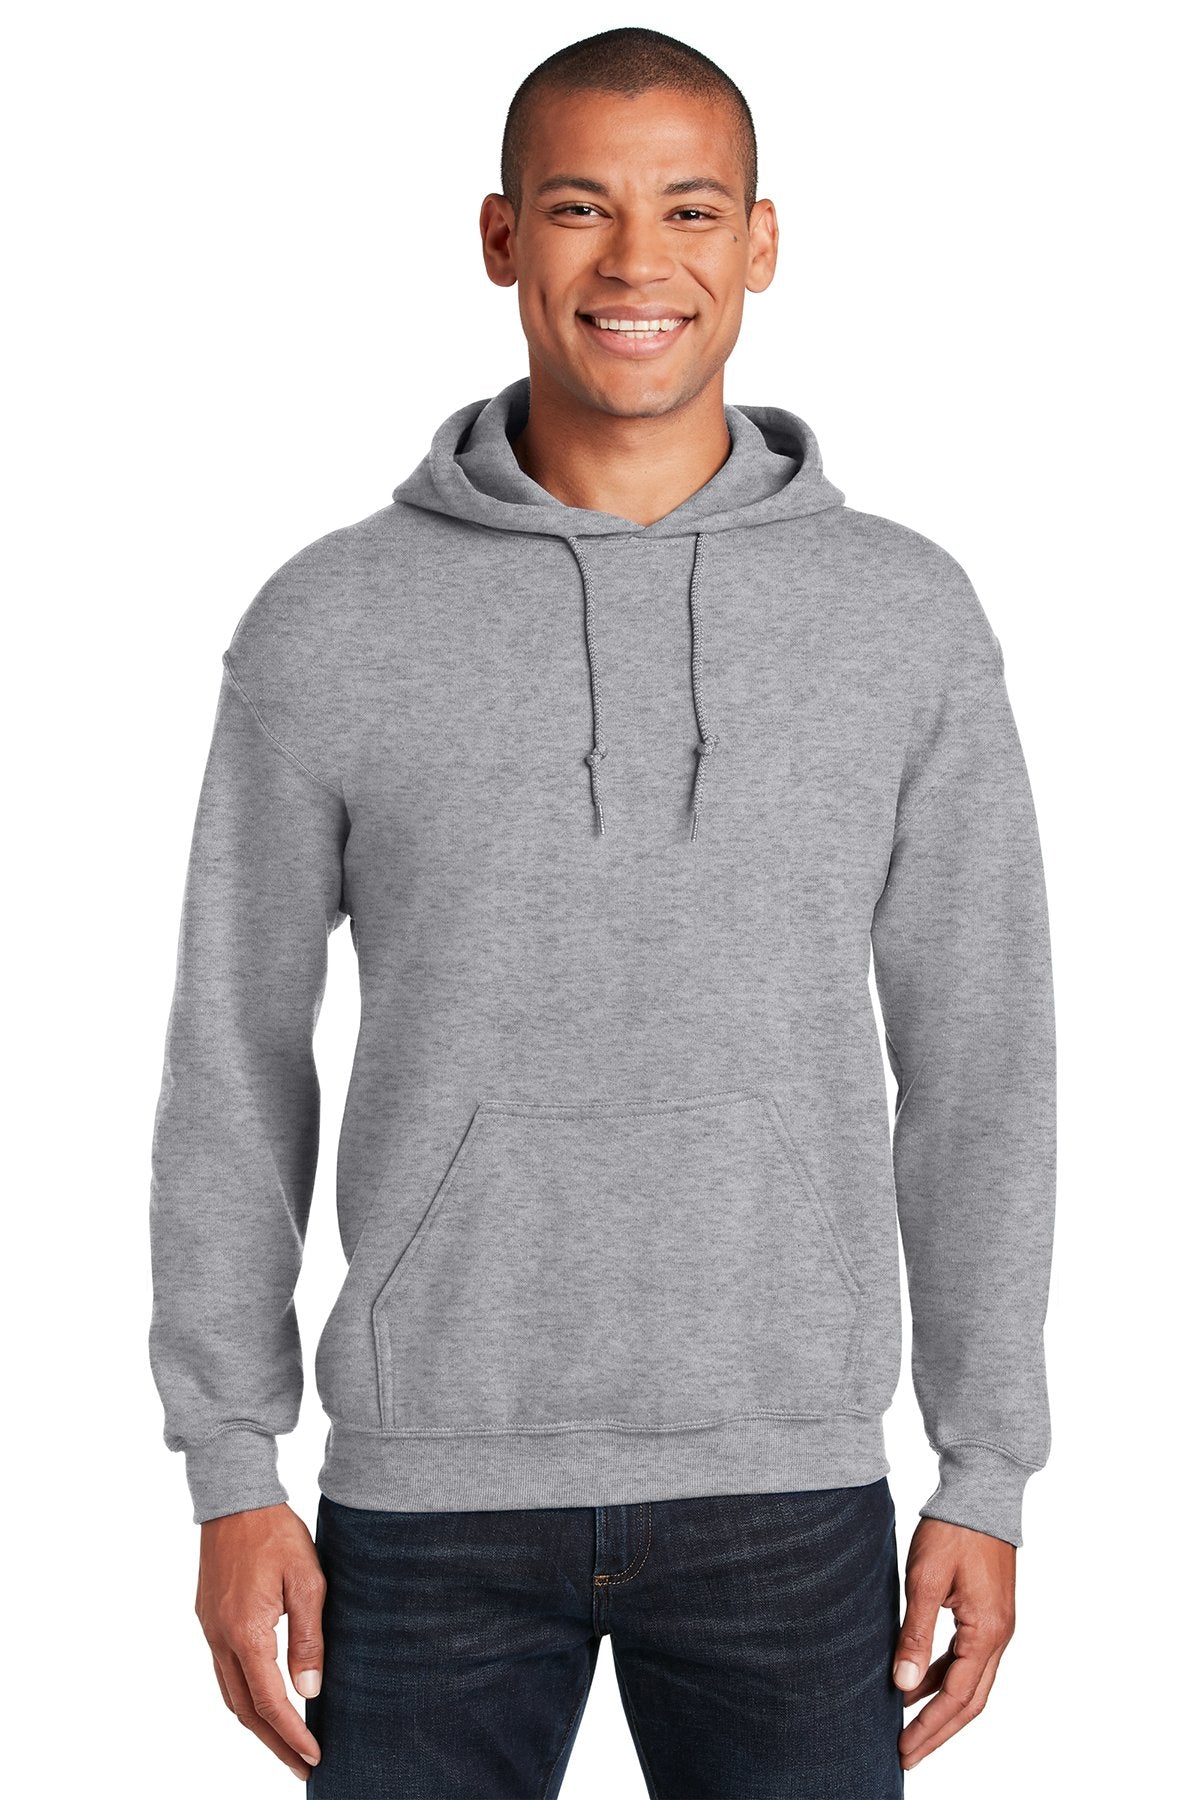 Gildan Heavy Blend Hooded Sweatshirt in Sport Grey, with a custom logo